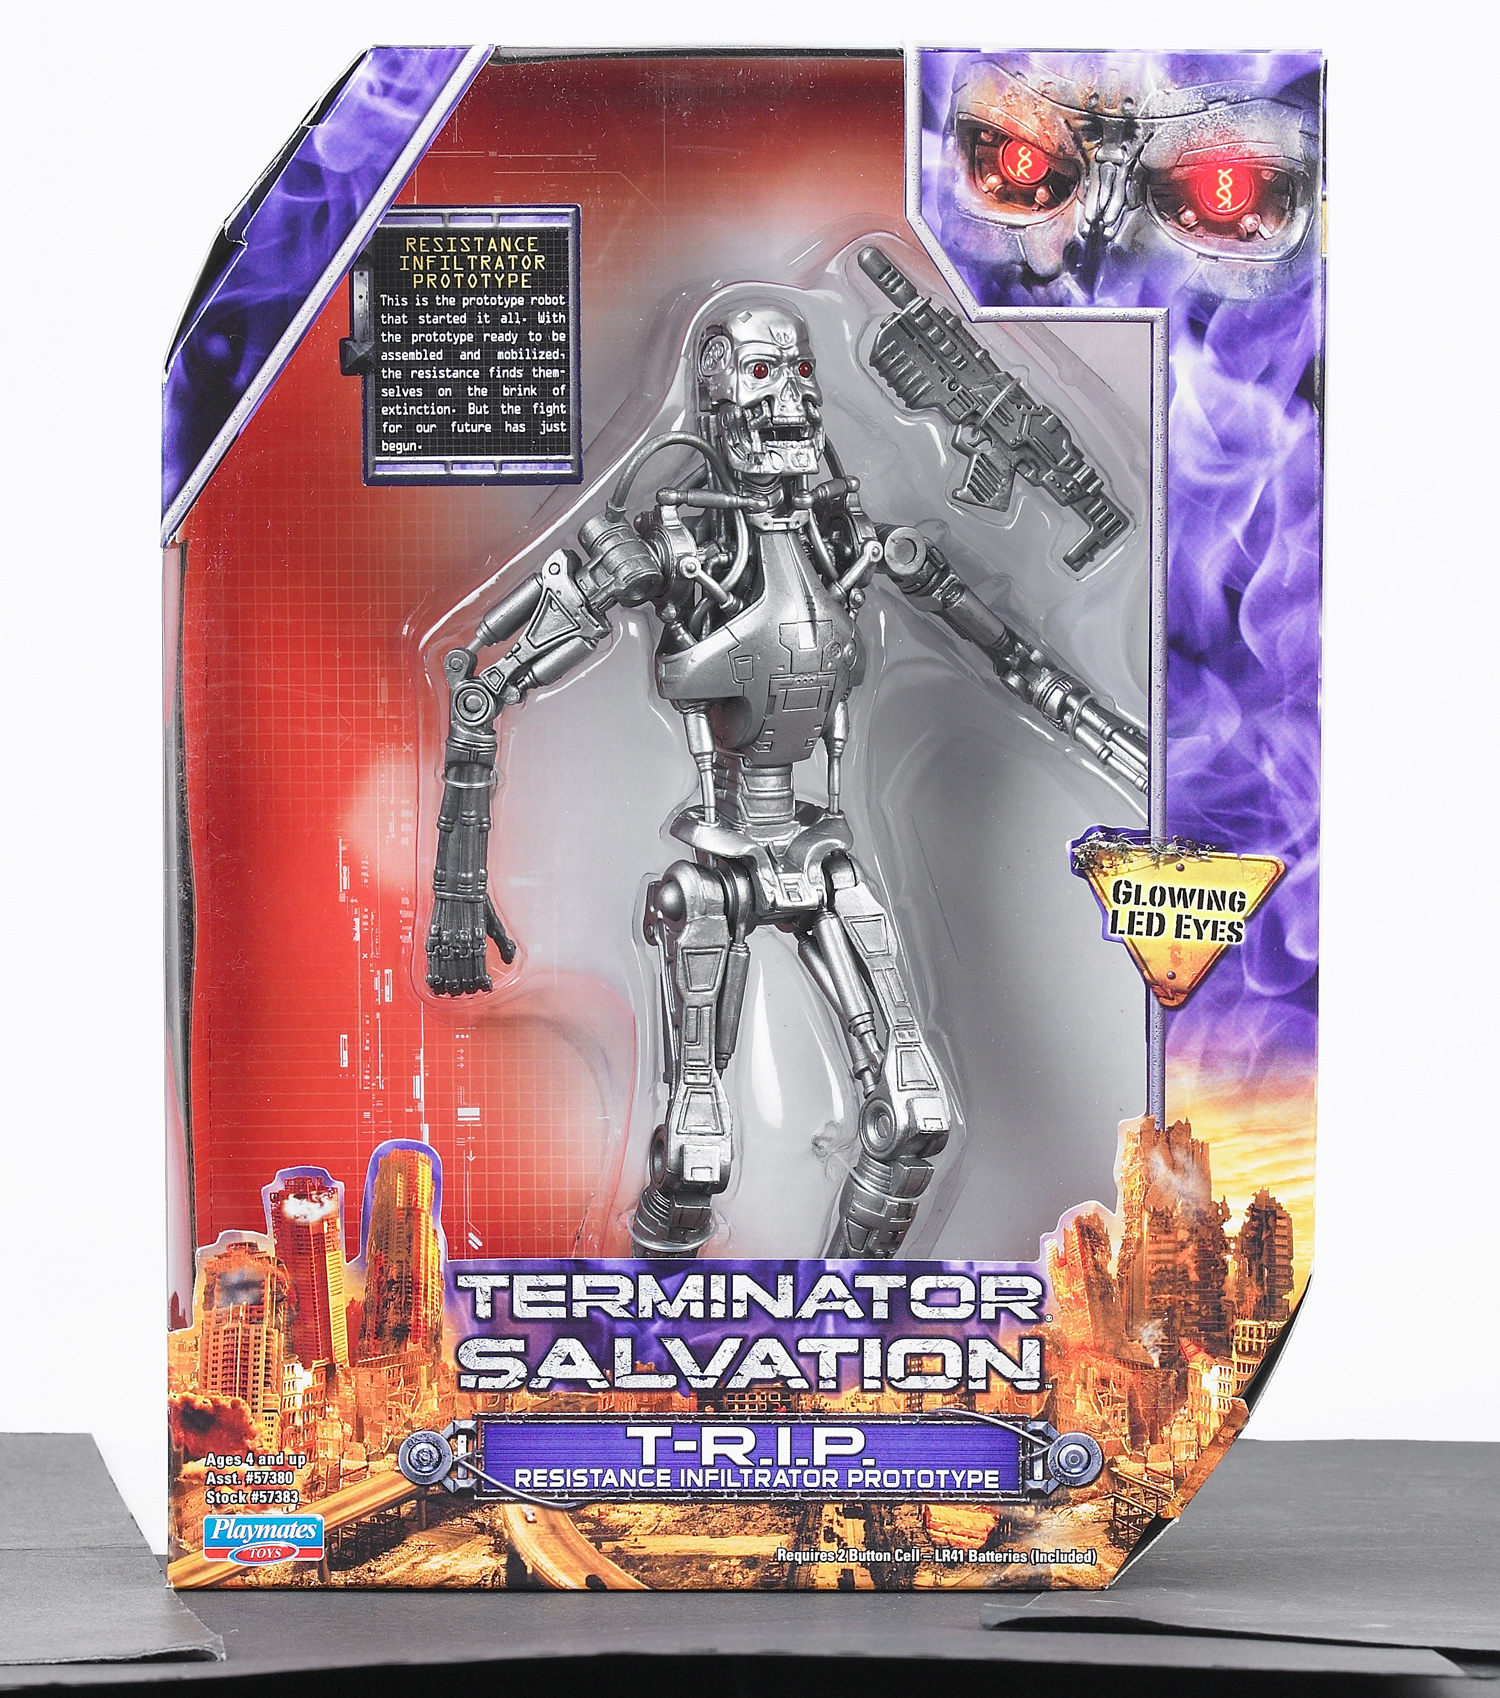 Meet The Terminator Salvation Toys